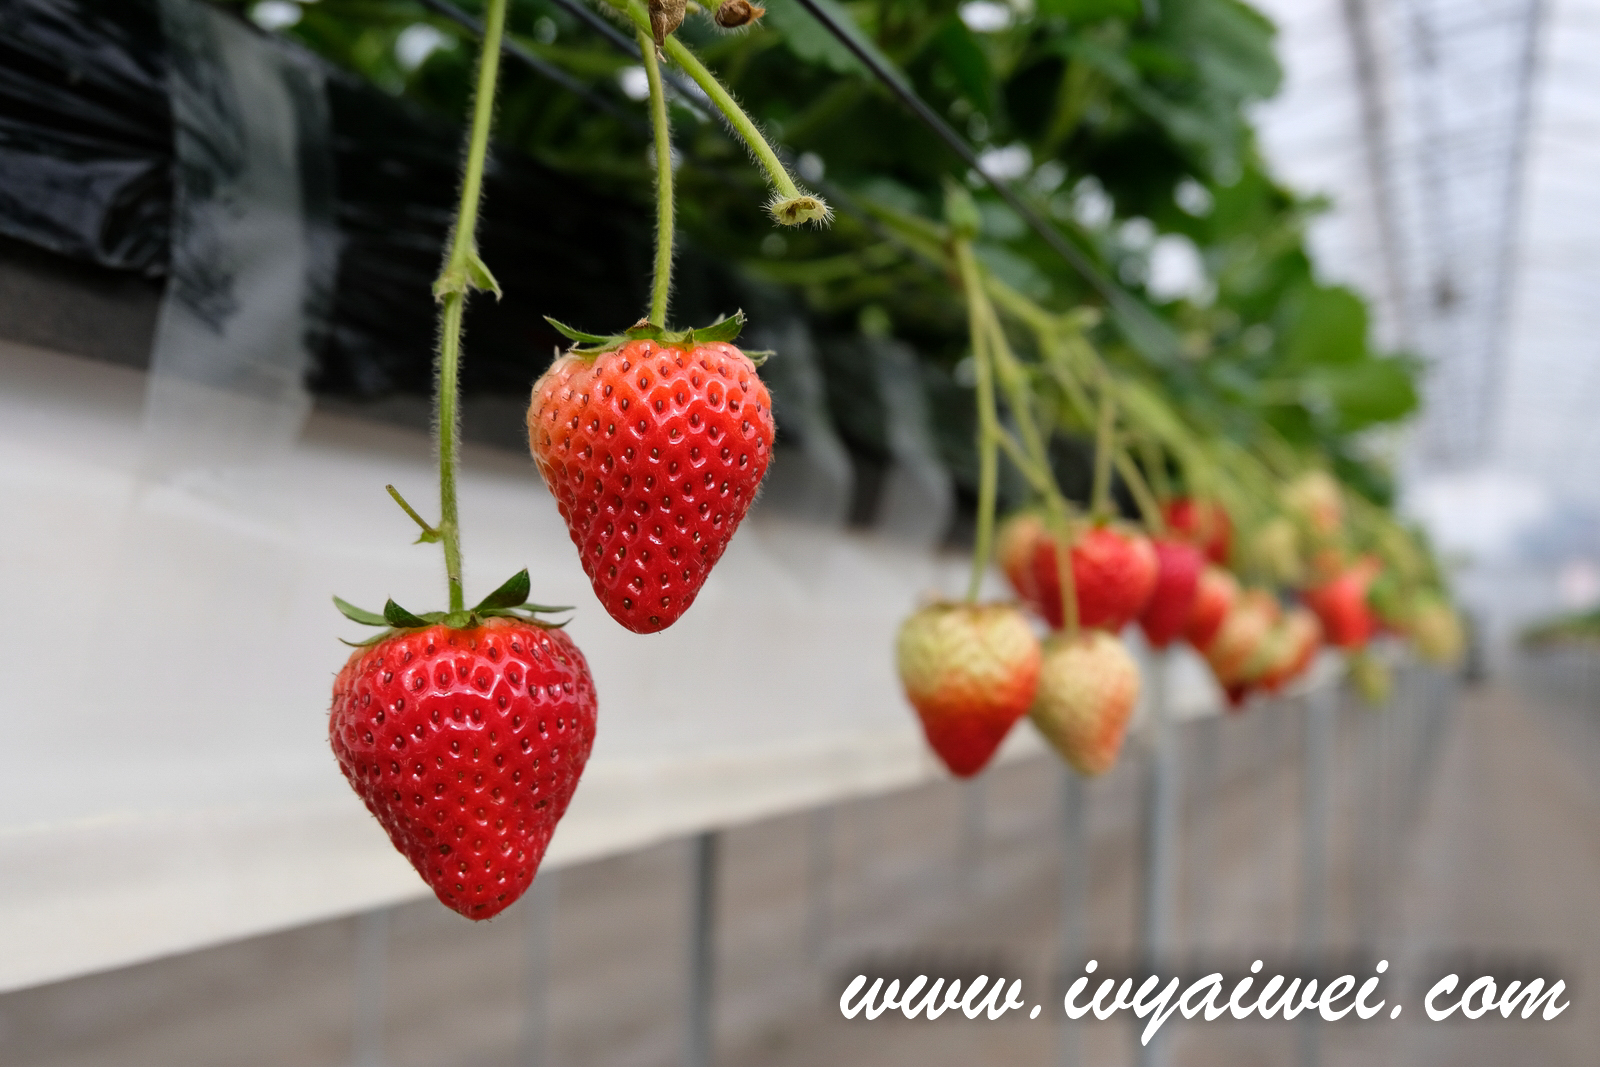 Chiba: Strawberry Picking Experience @ Dragon Farm